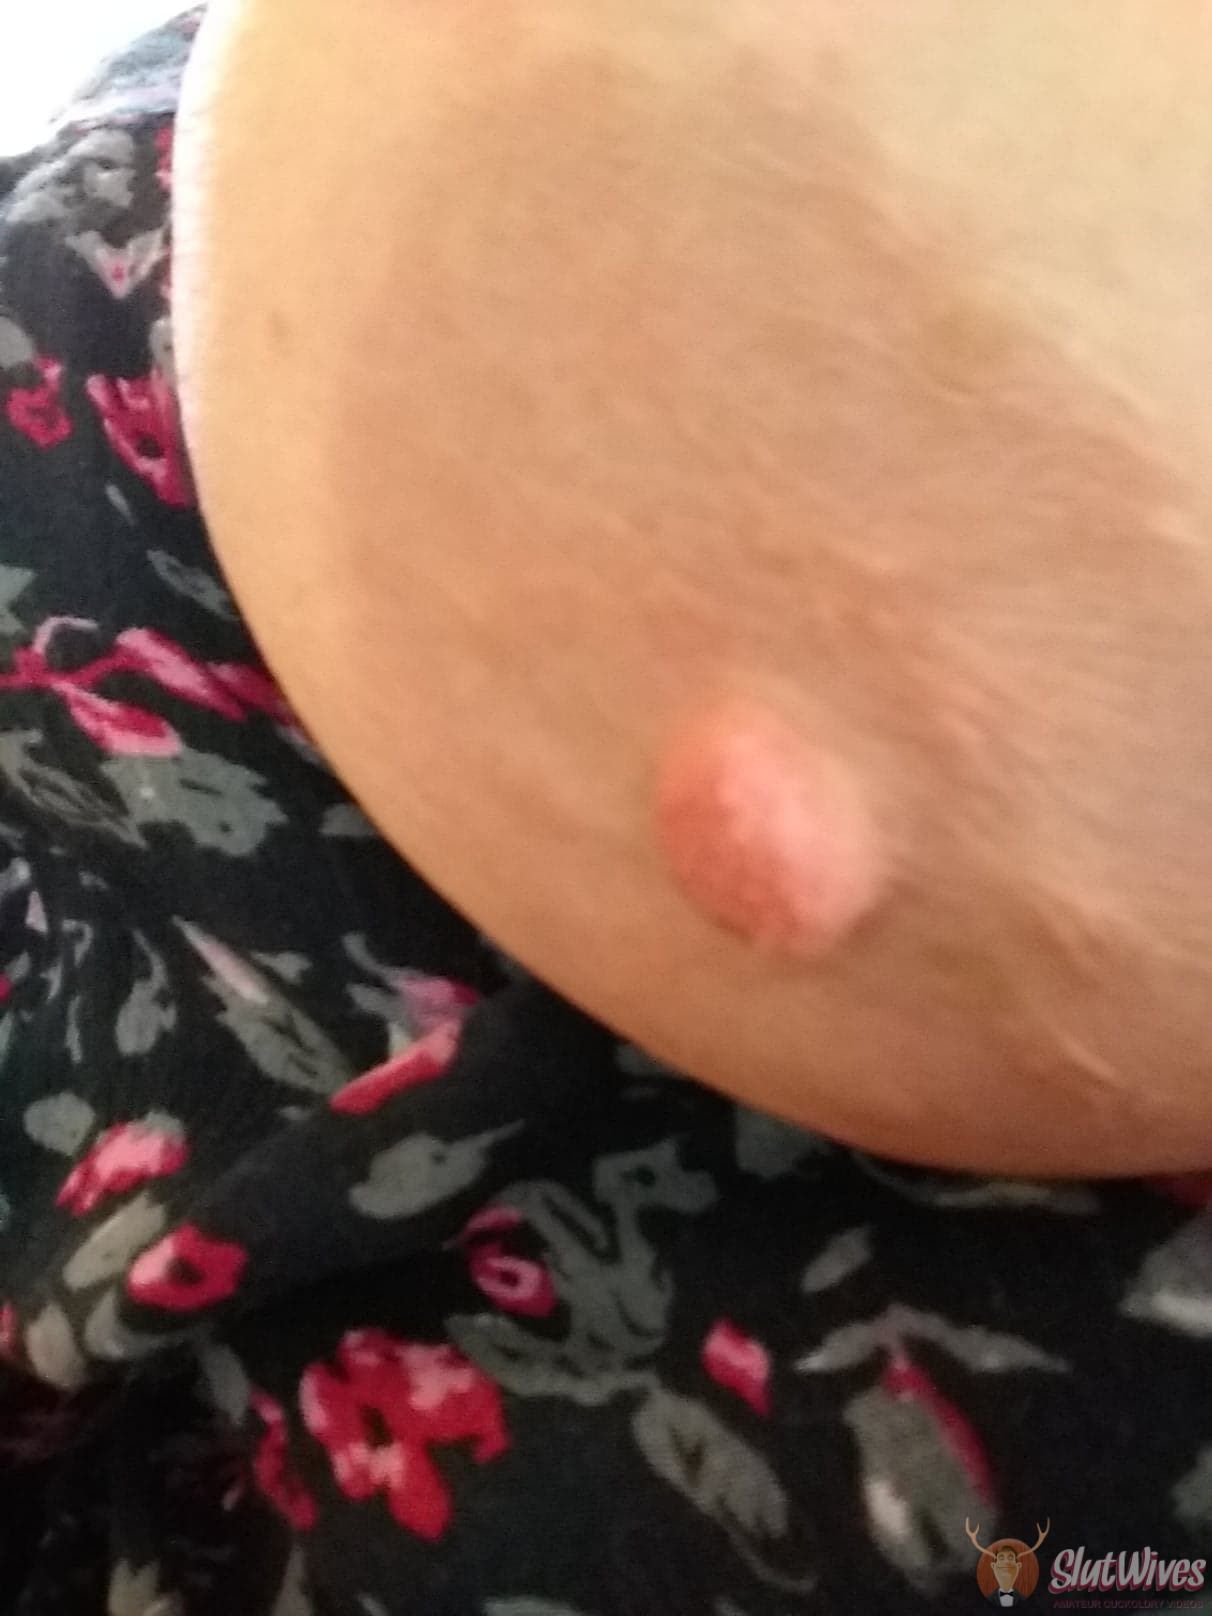 My Wife's Nipple